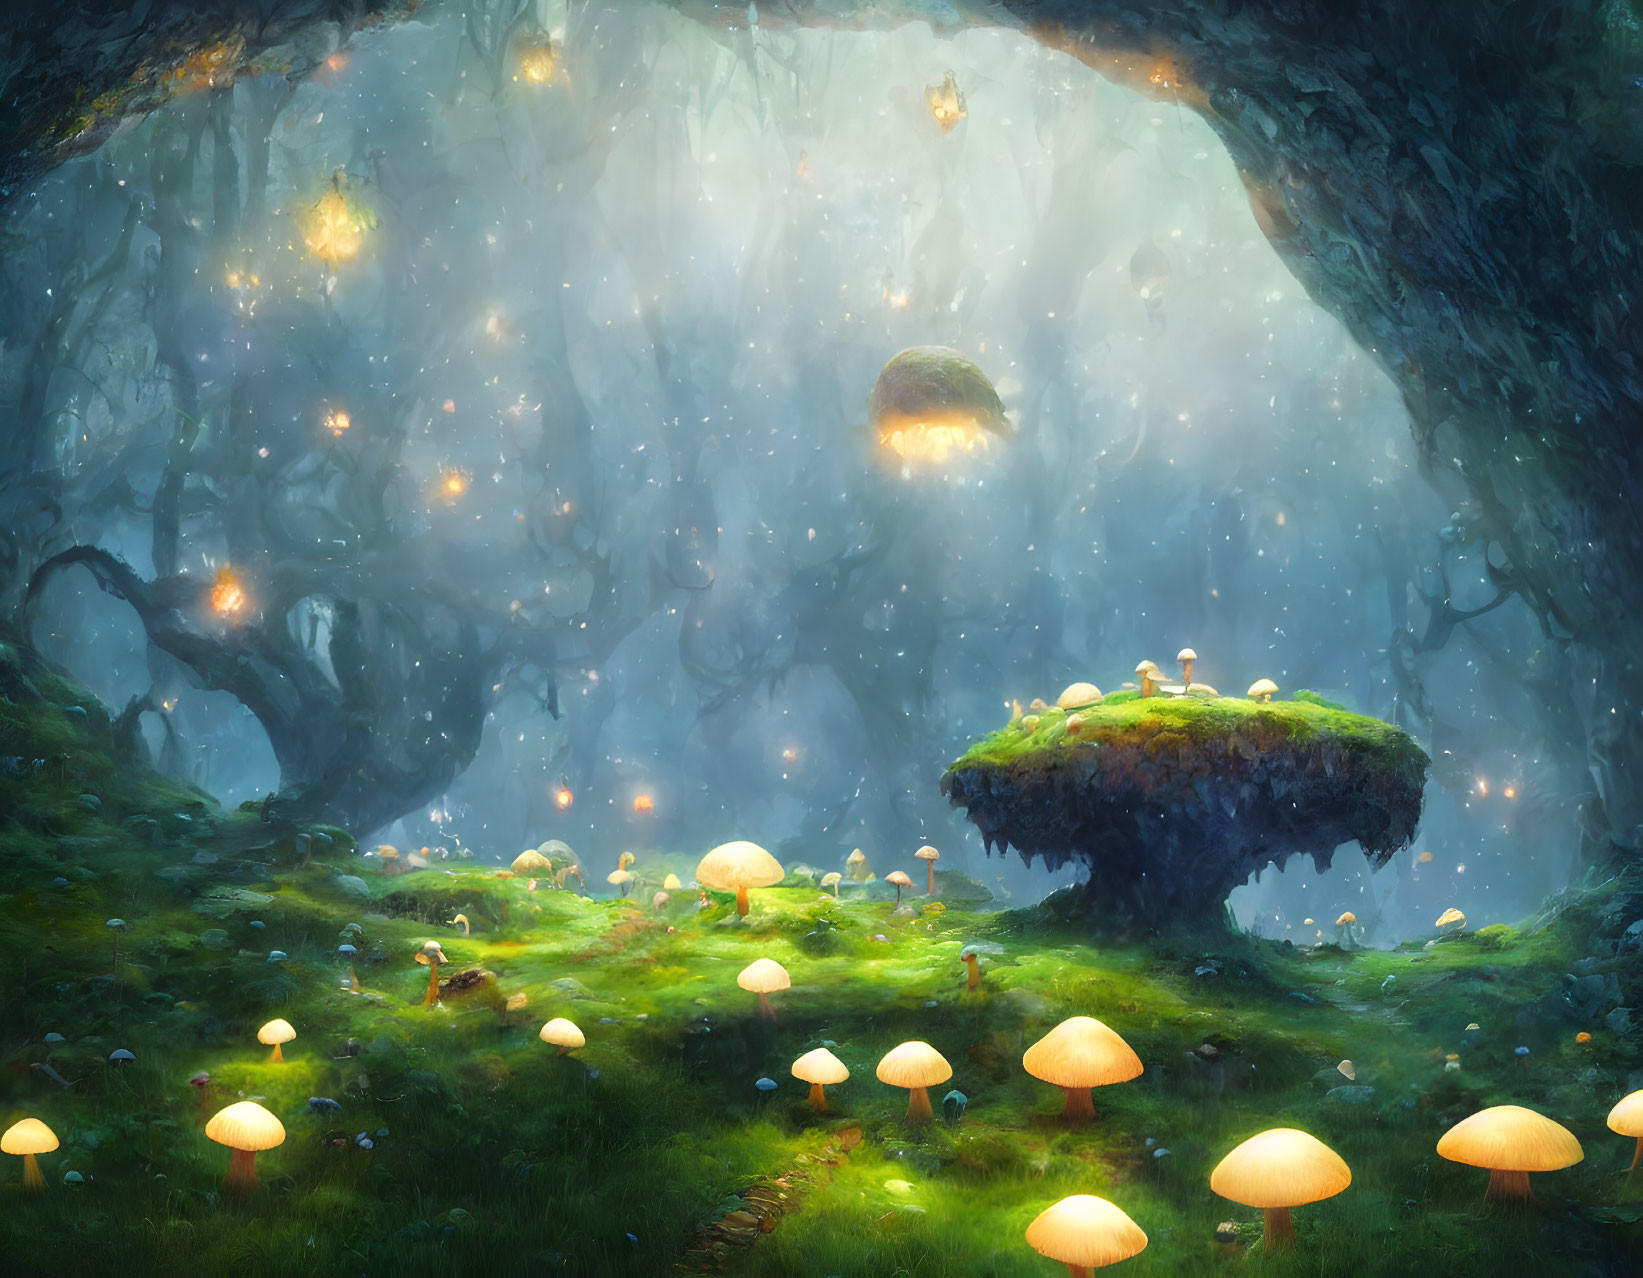 Where the Mushrooms Light the Way